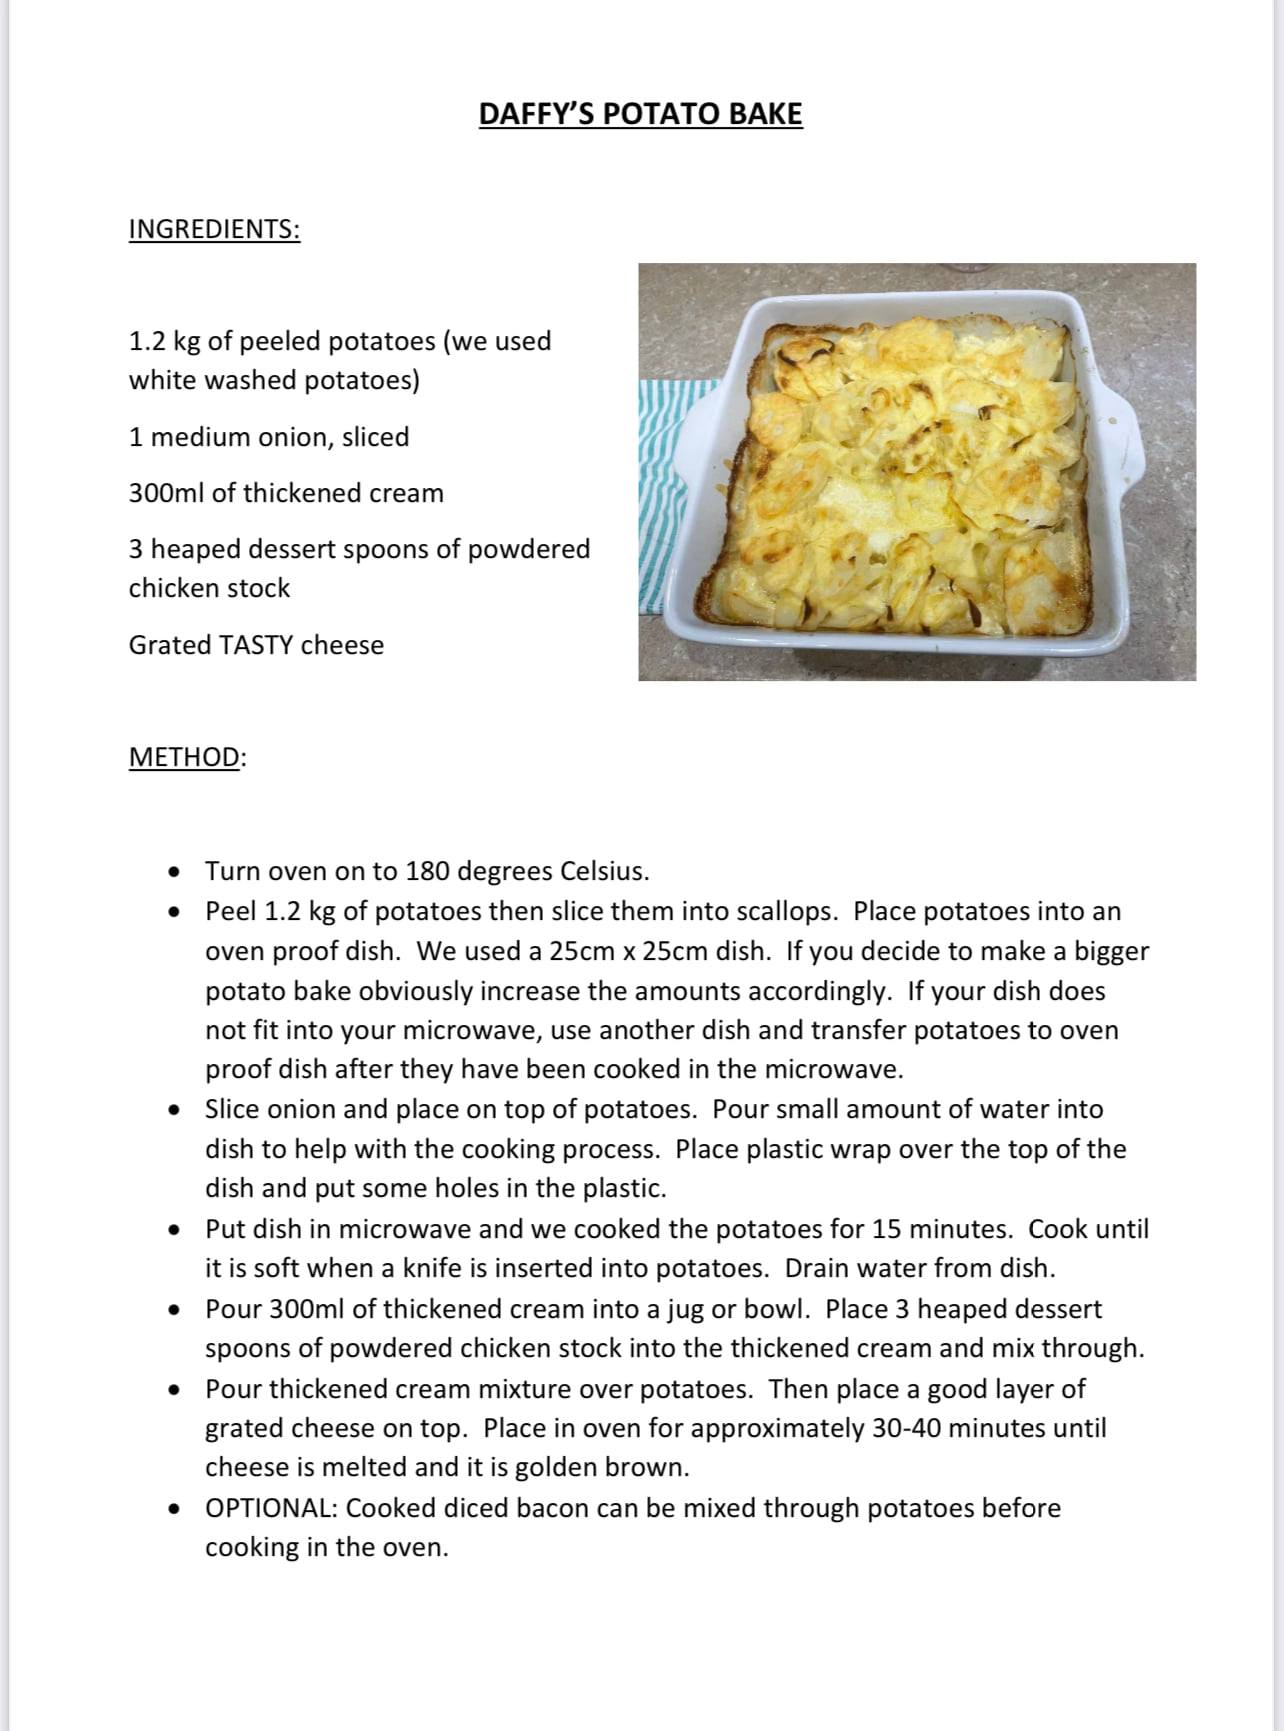 Daffys Easy homemade Potato Bake Recipe